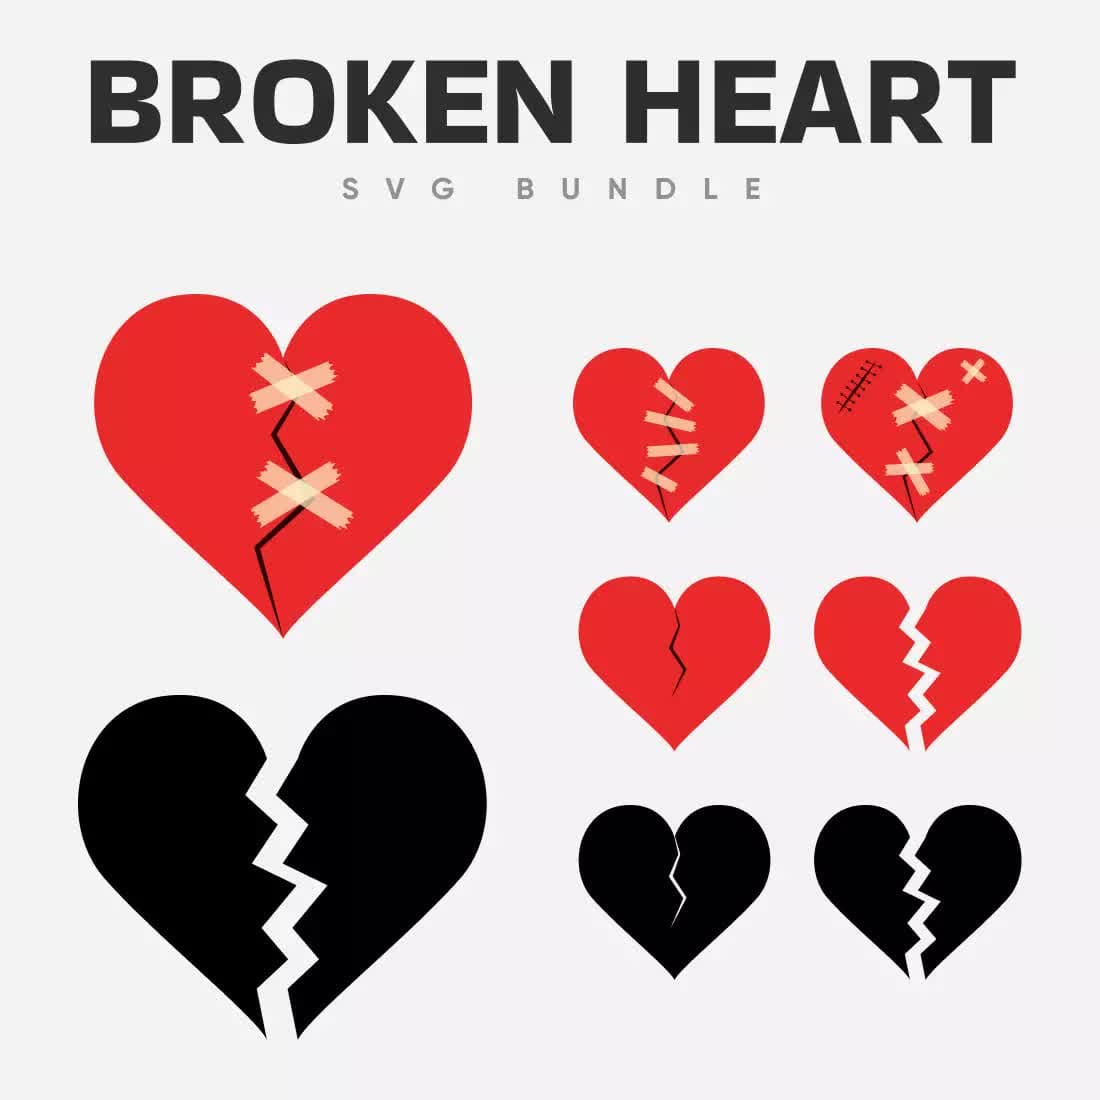 Broken Heart SVG Bundle Preview 2.